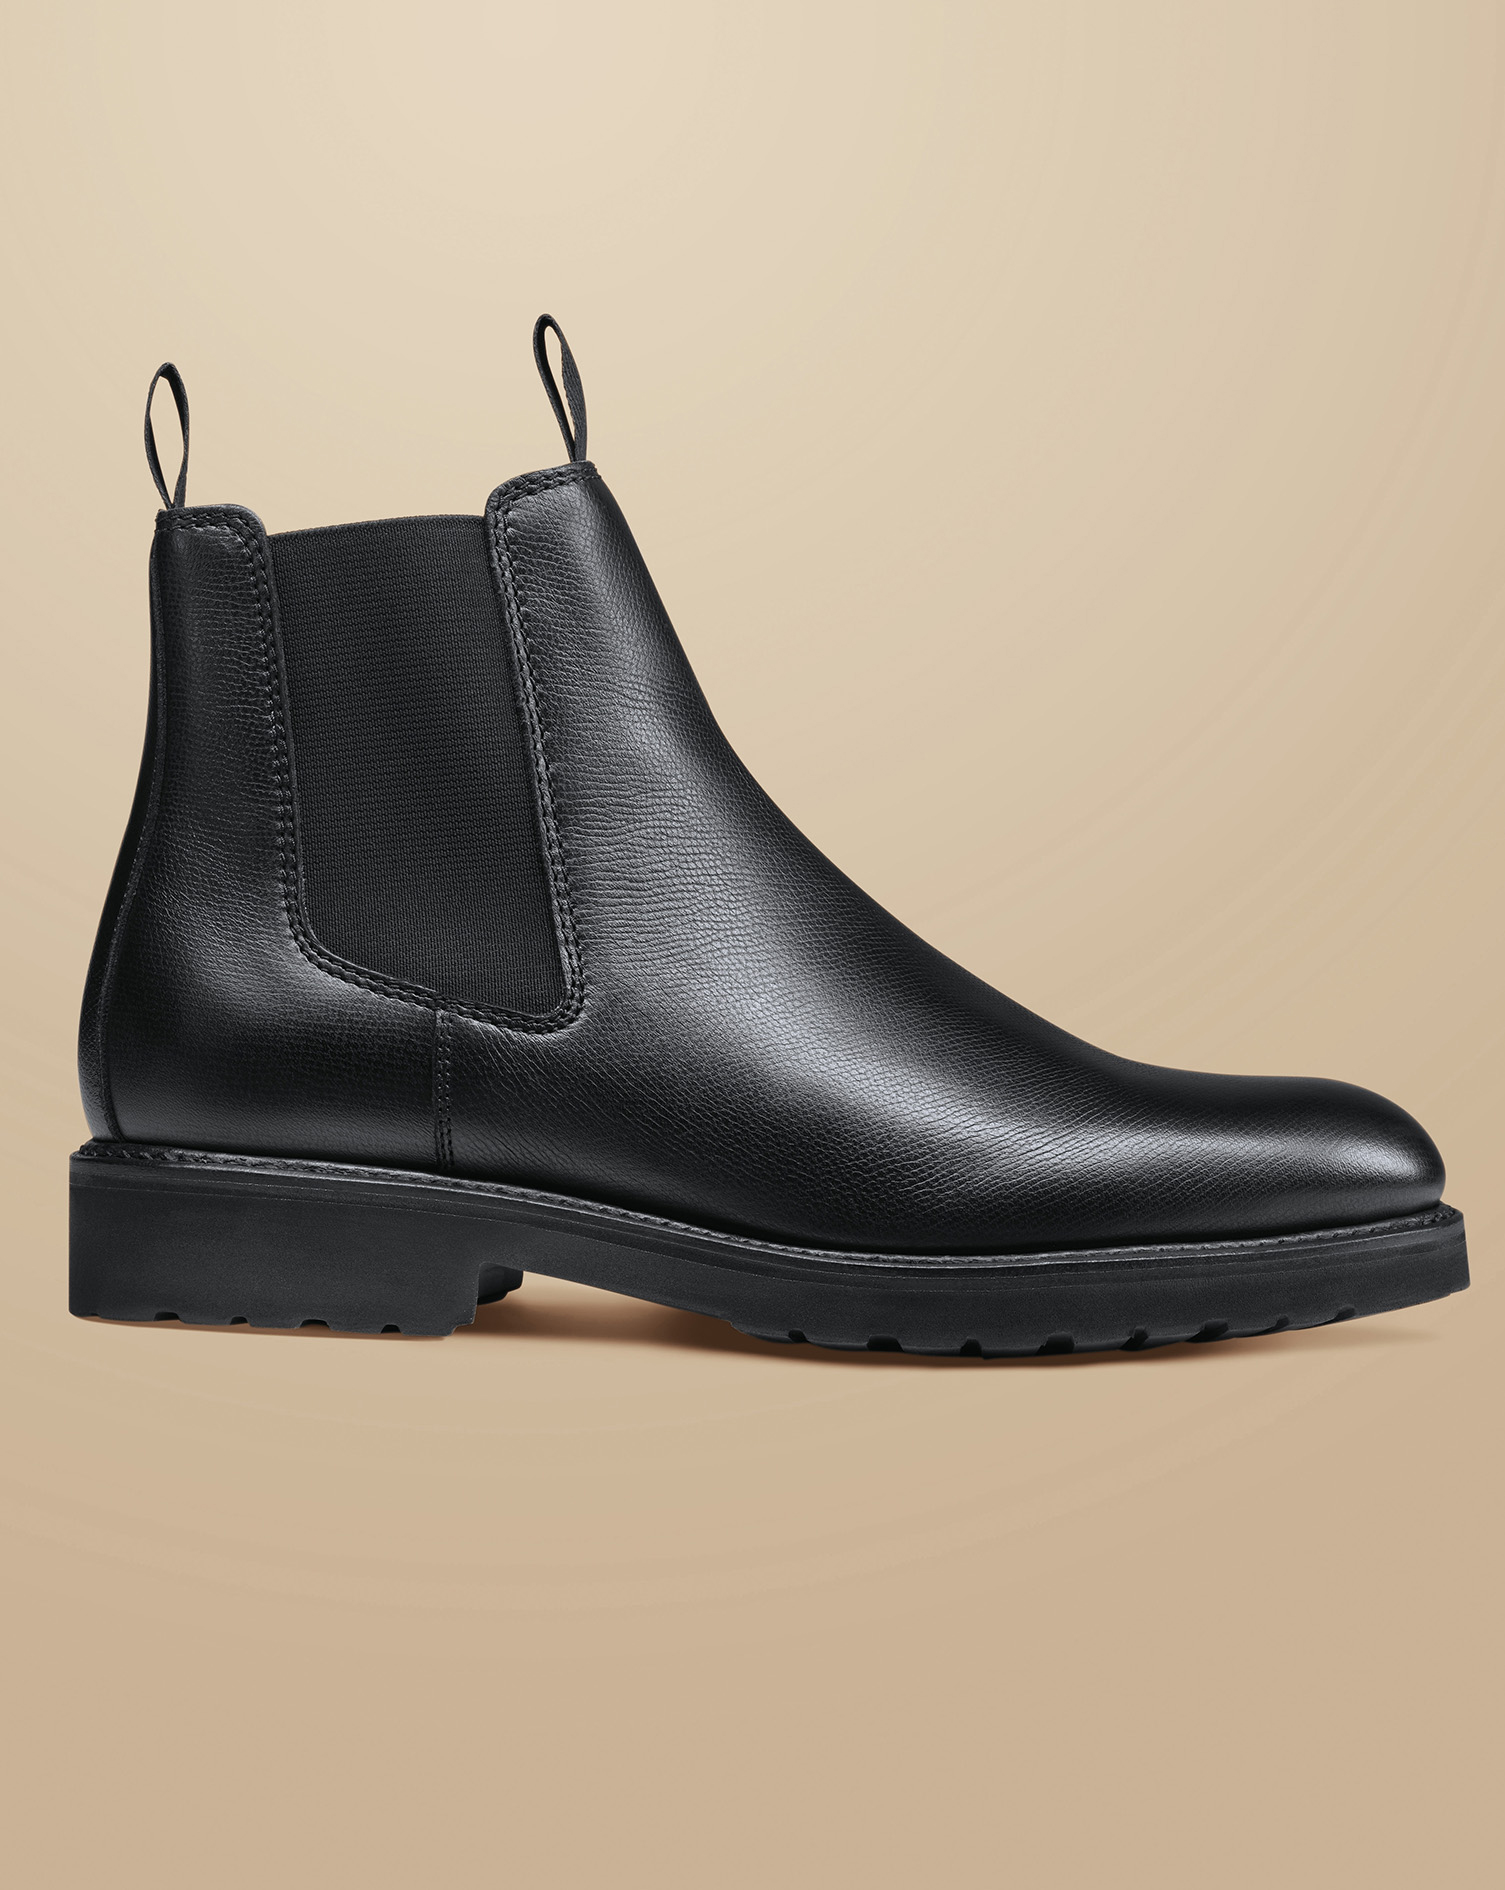 Men's Charles Tyrwhitt Rubber Sole Grain Leather Chelsea Boots - Black Size 12
